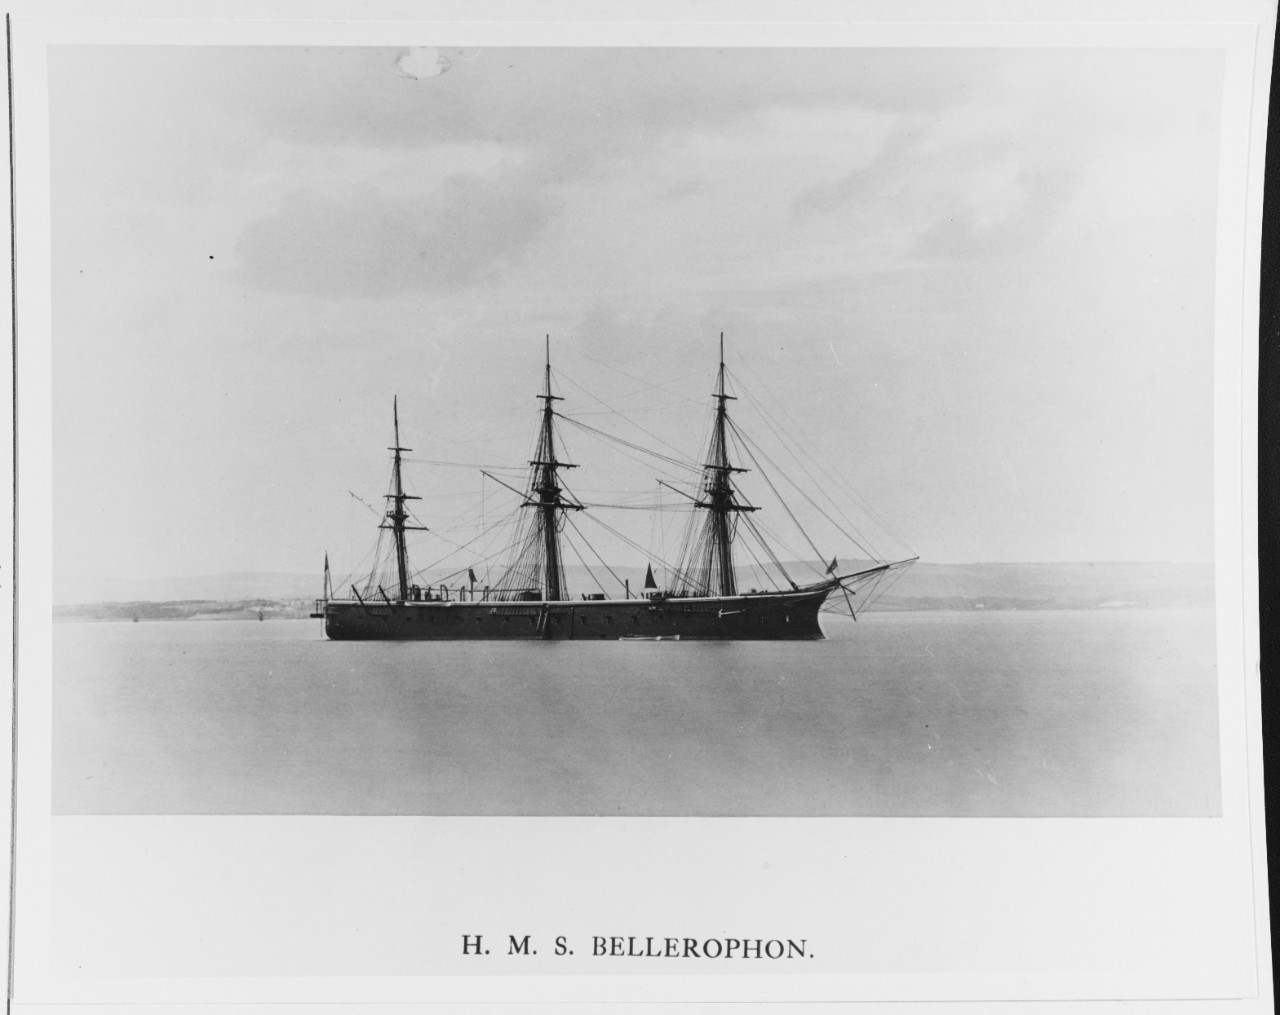 HMS BELLEROPHON (BRITISH BATTLESHIP, 1865)